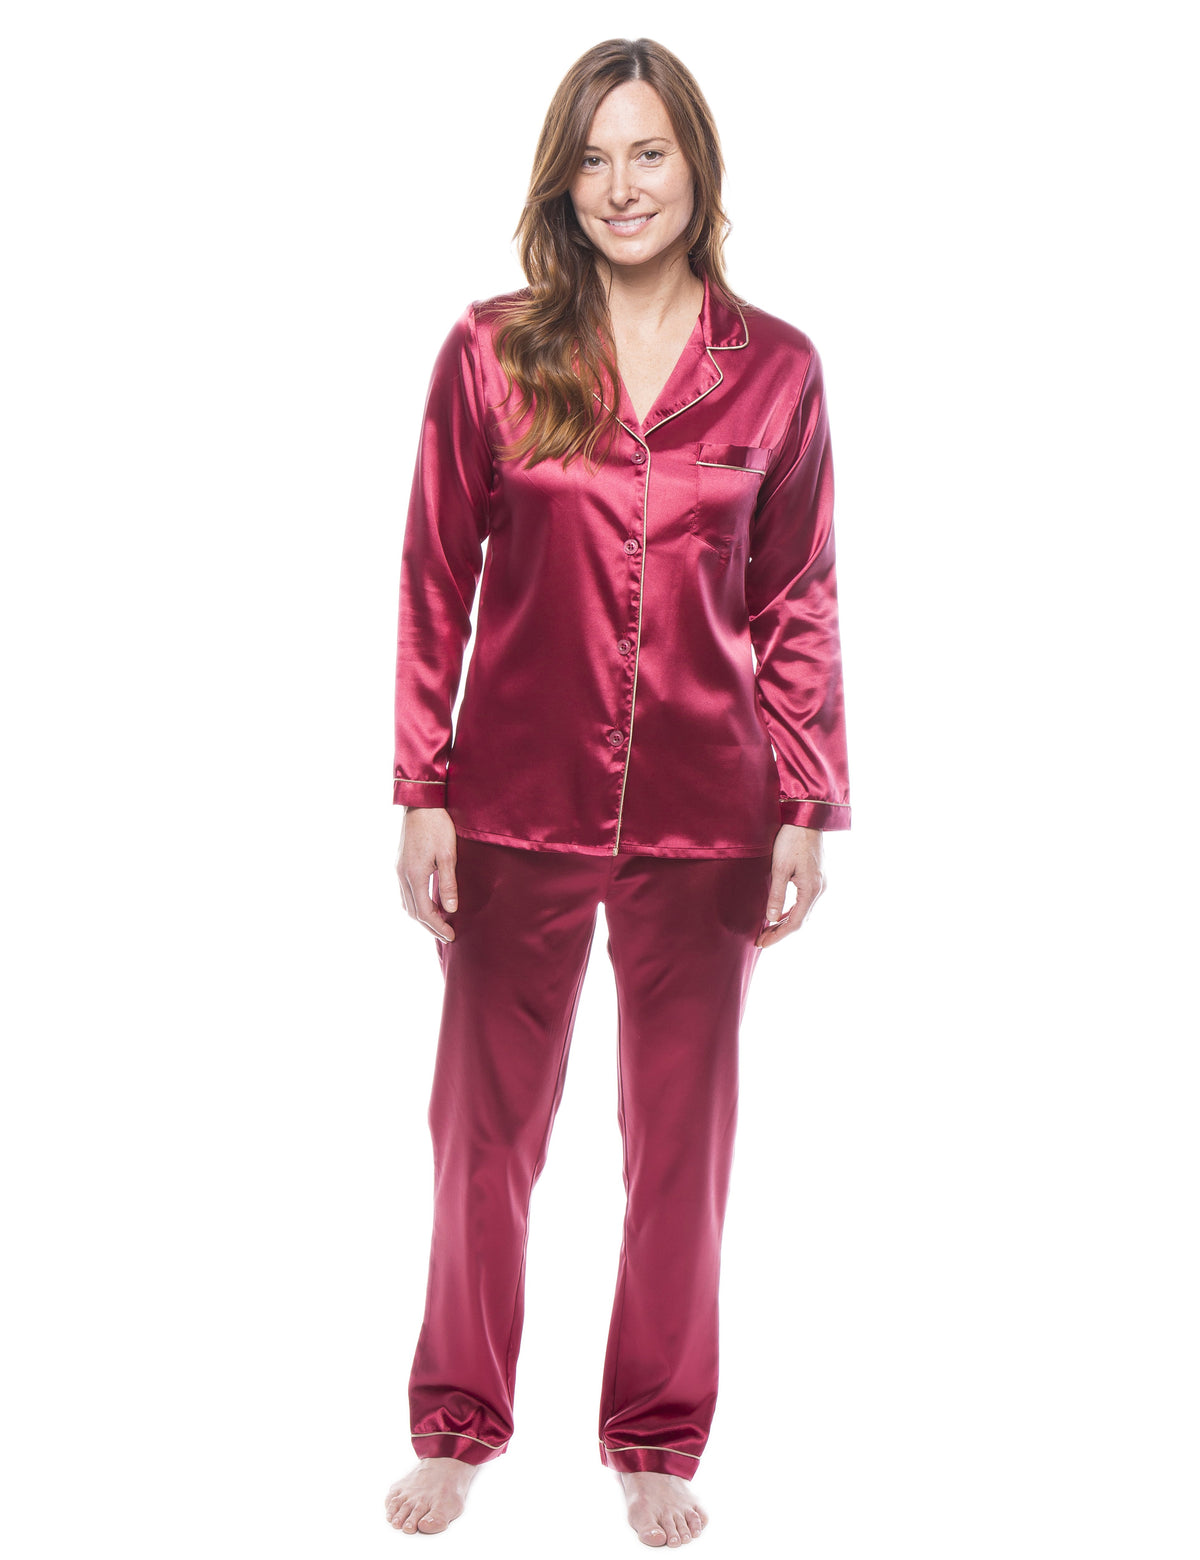 Women's Satin Pajama/Sleepwear Set - Burgundy